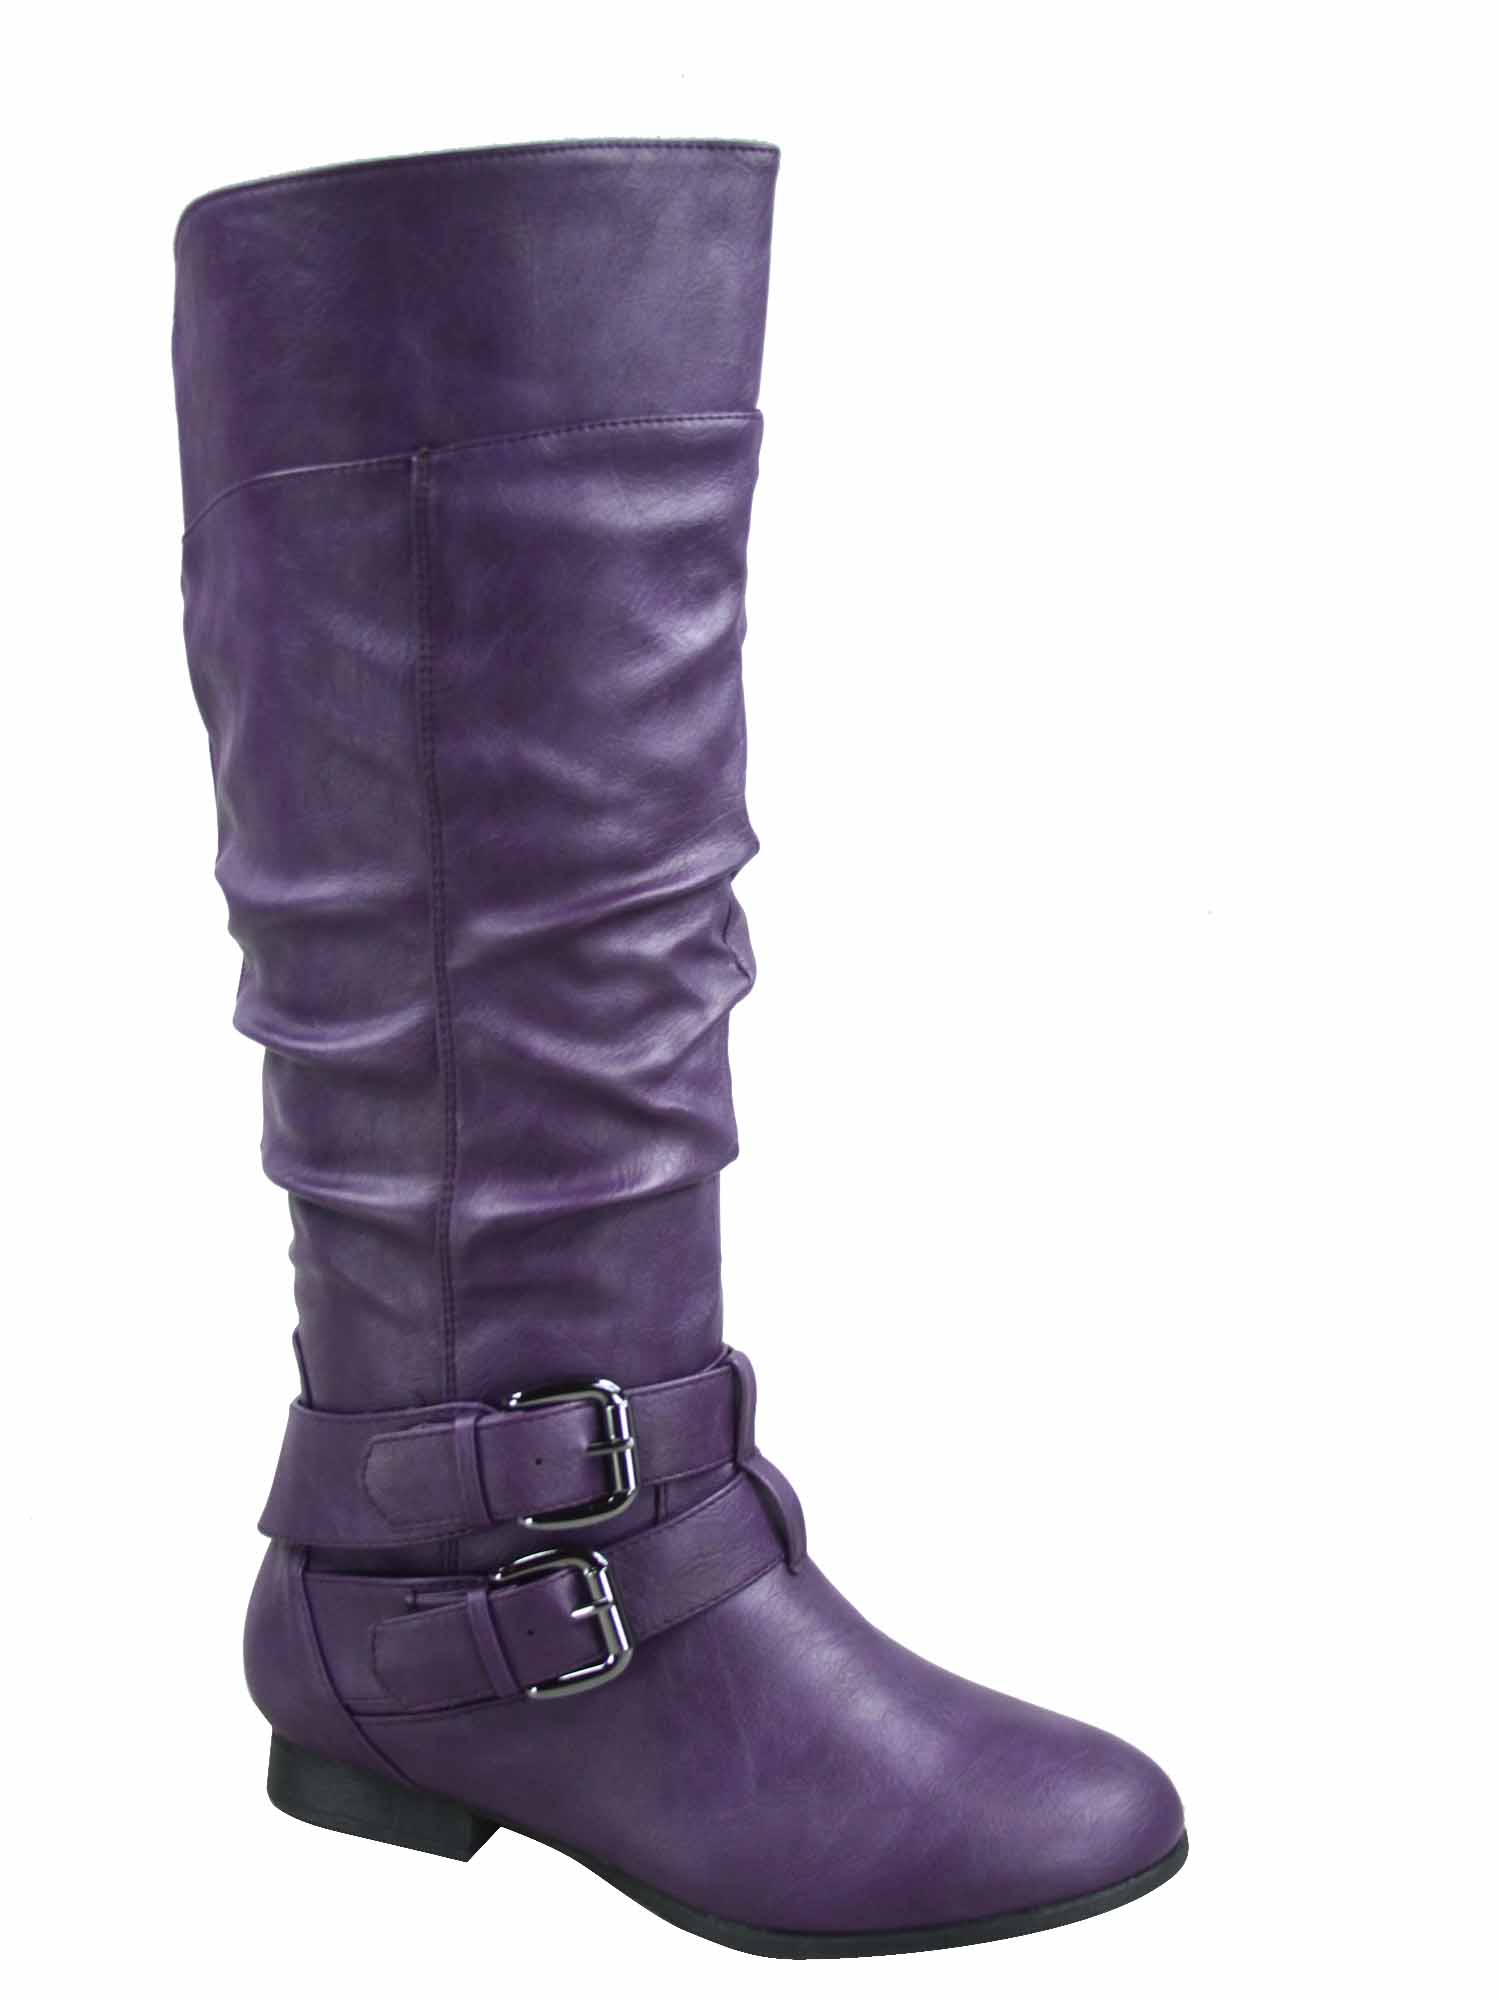 Top Moda Coco-20 Womens Fashion Round Toe Low Heel Knee High Zipper Riding Boot Shoes